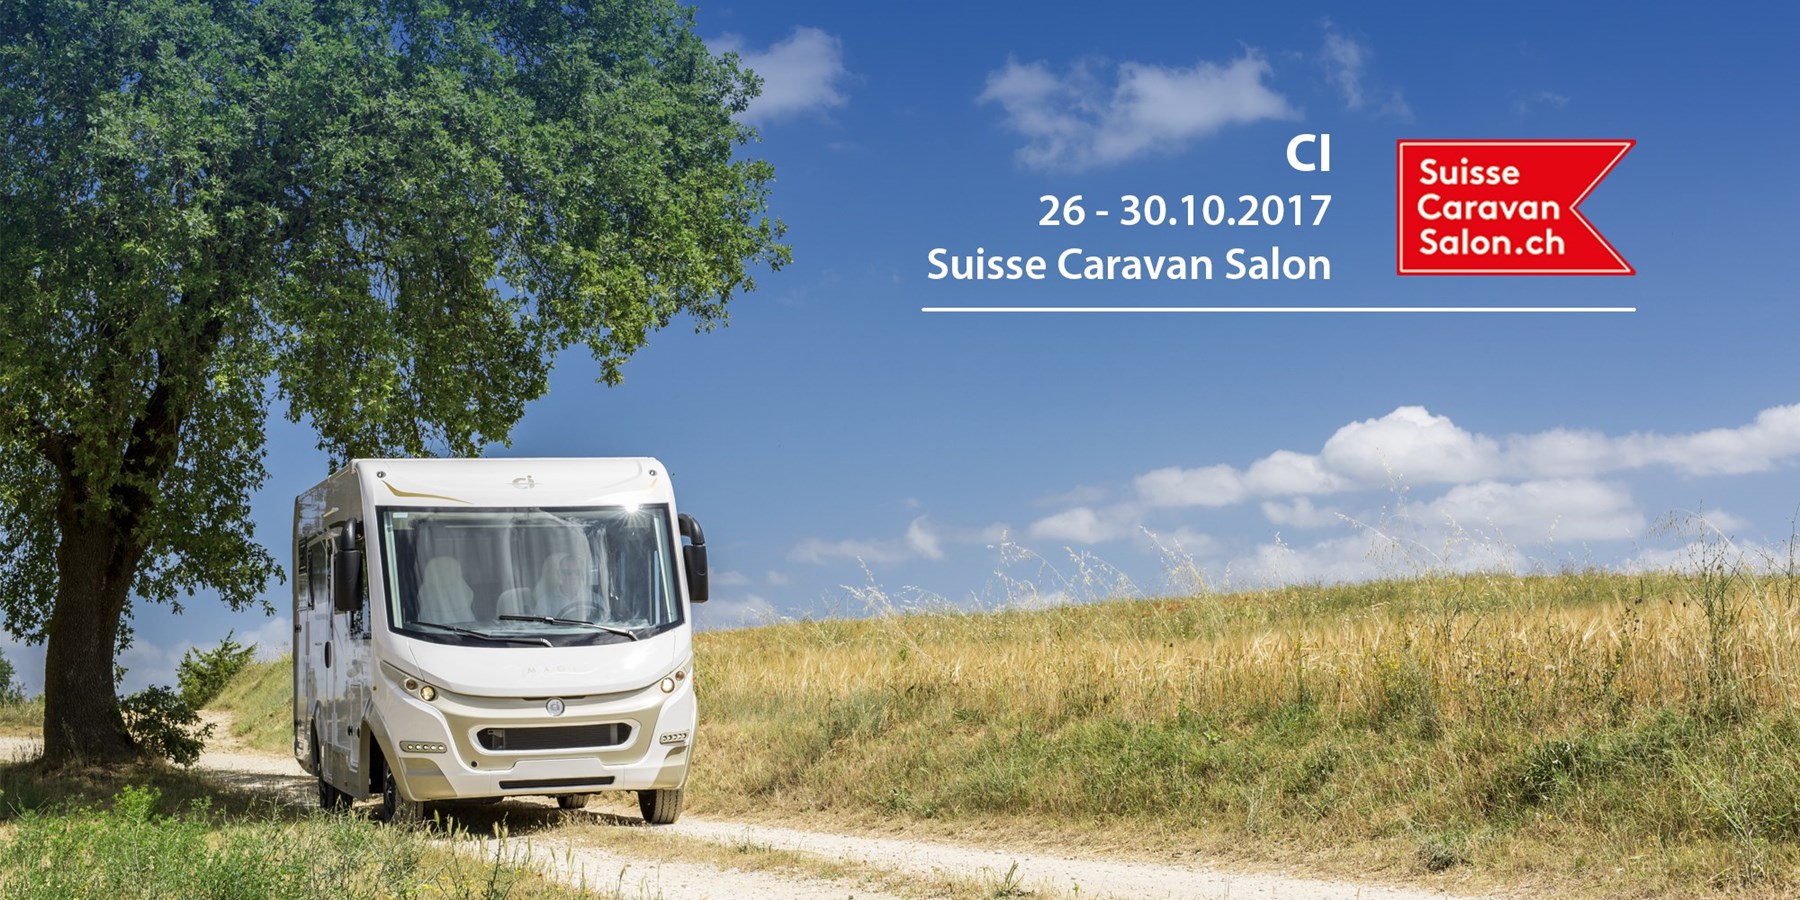 CI - Suisse Caravan Salon 2017